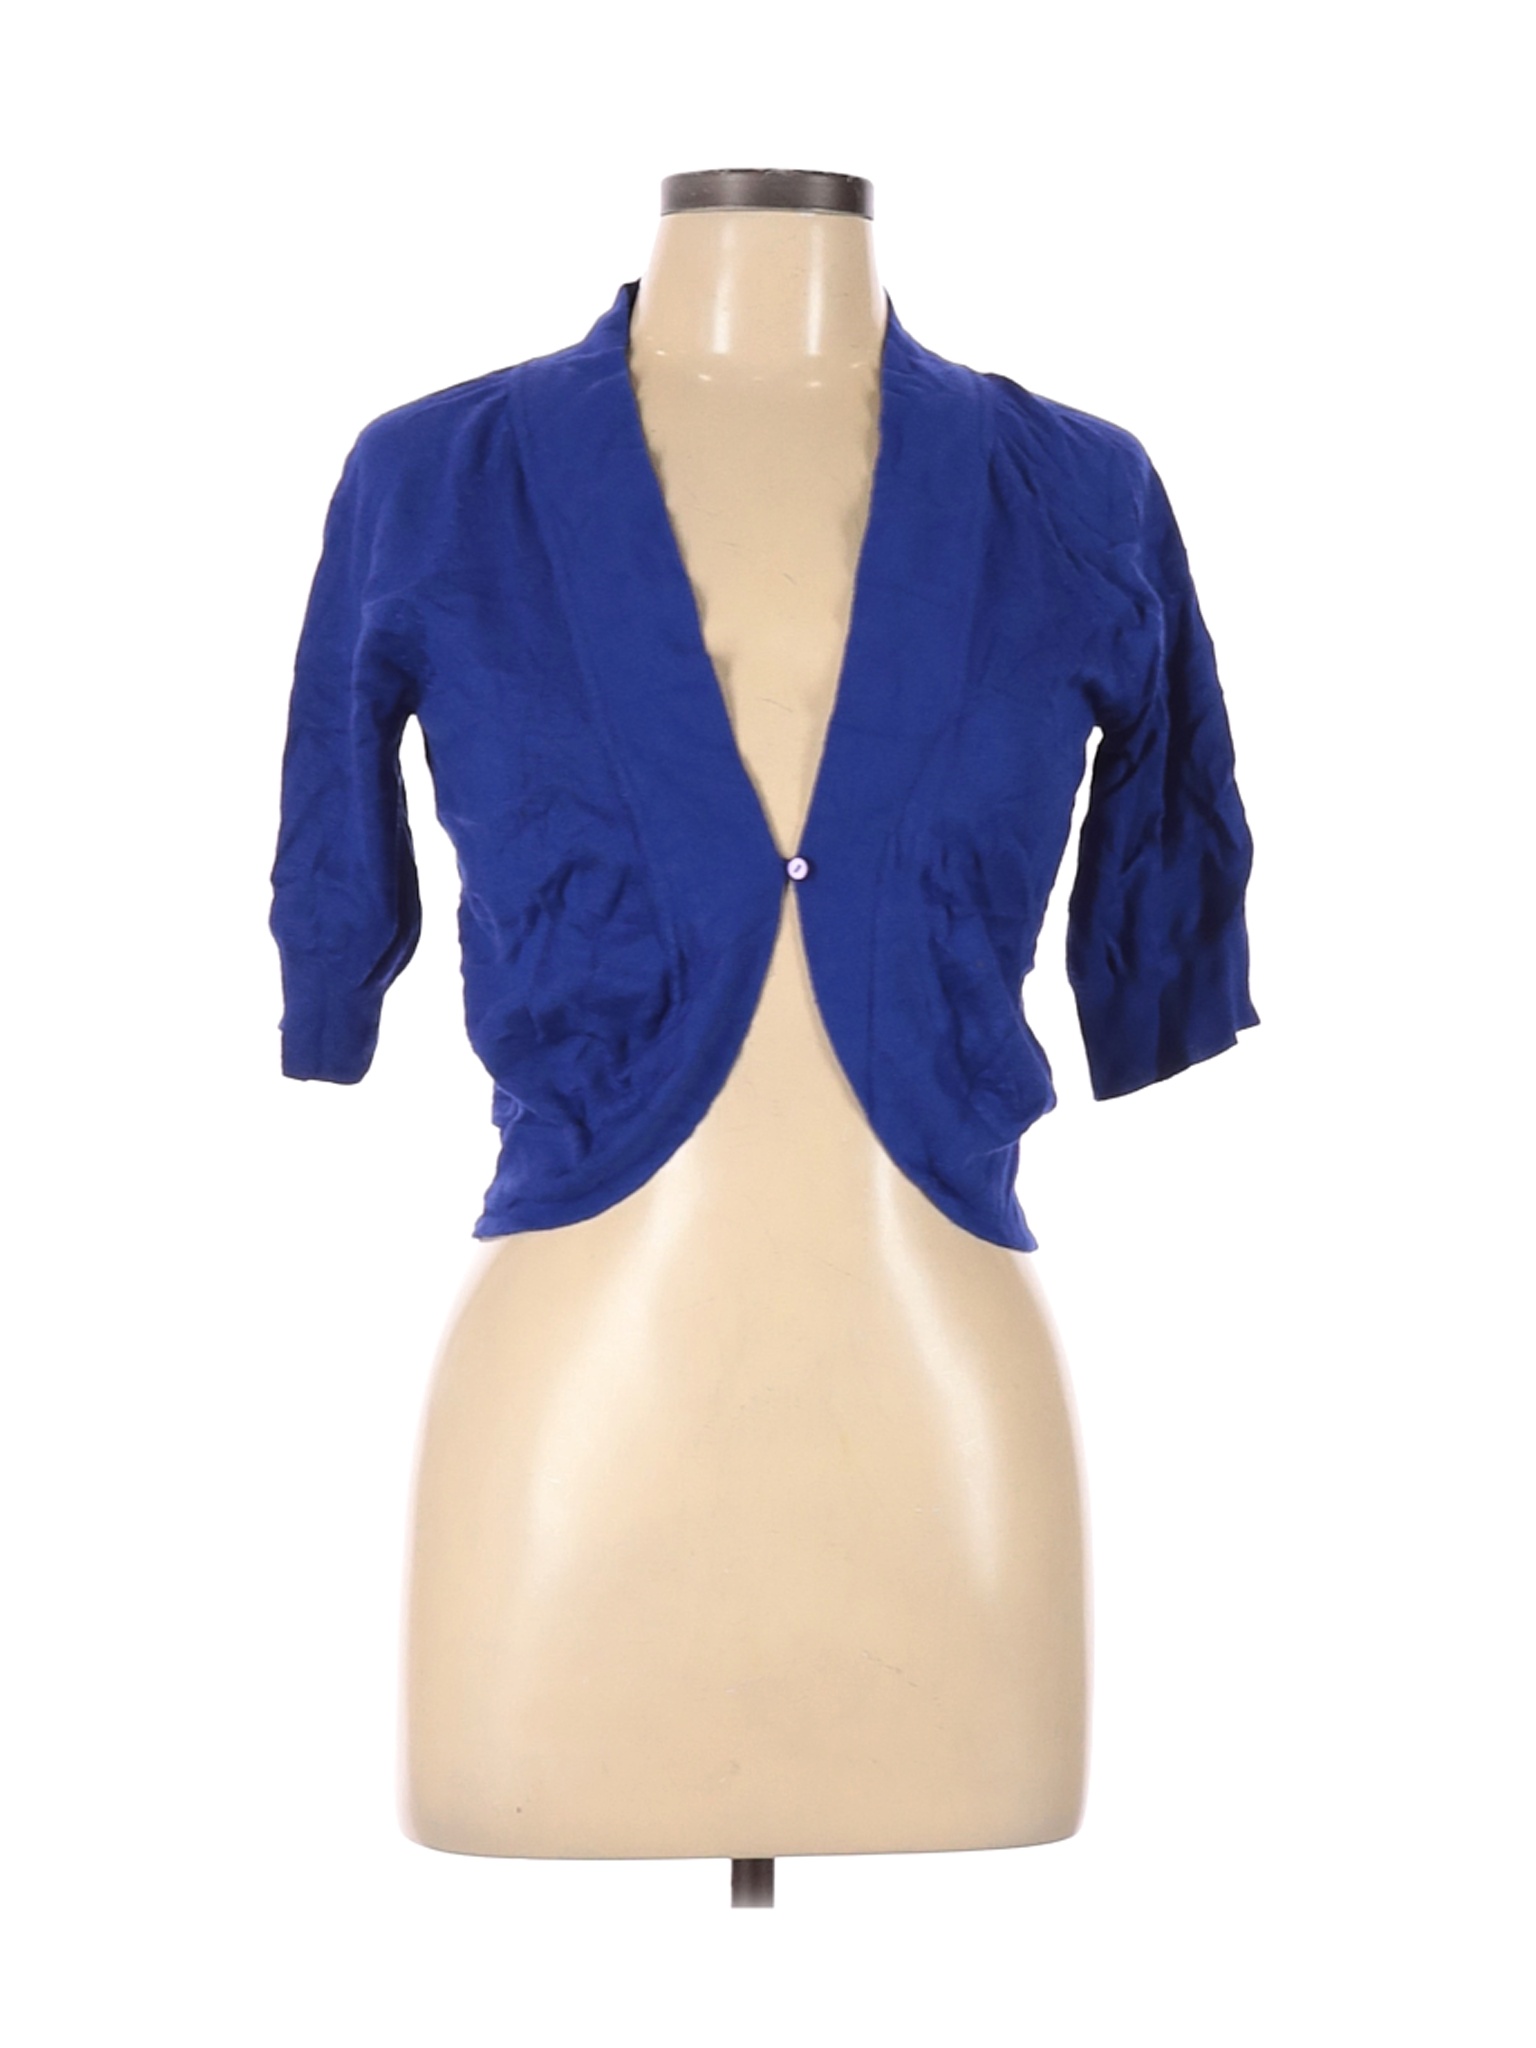 DressBarn Women Blue Shrug L | eBay